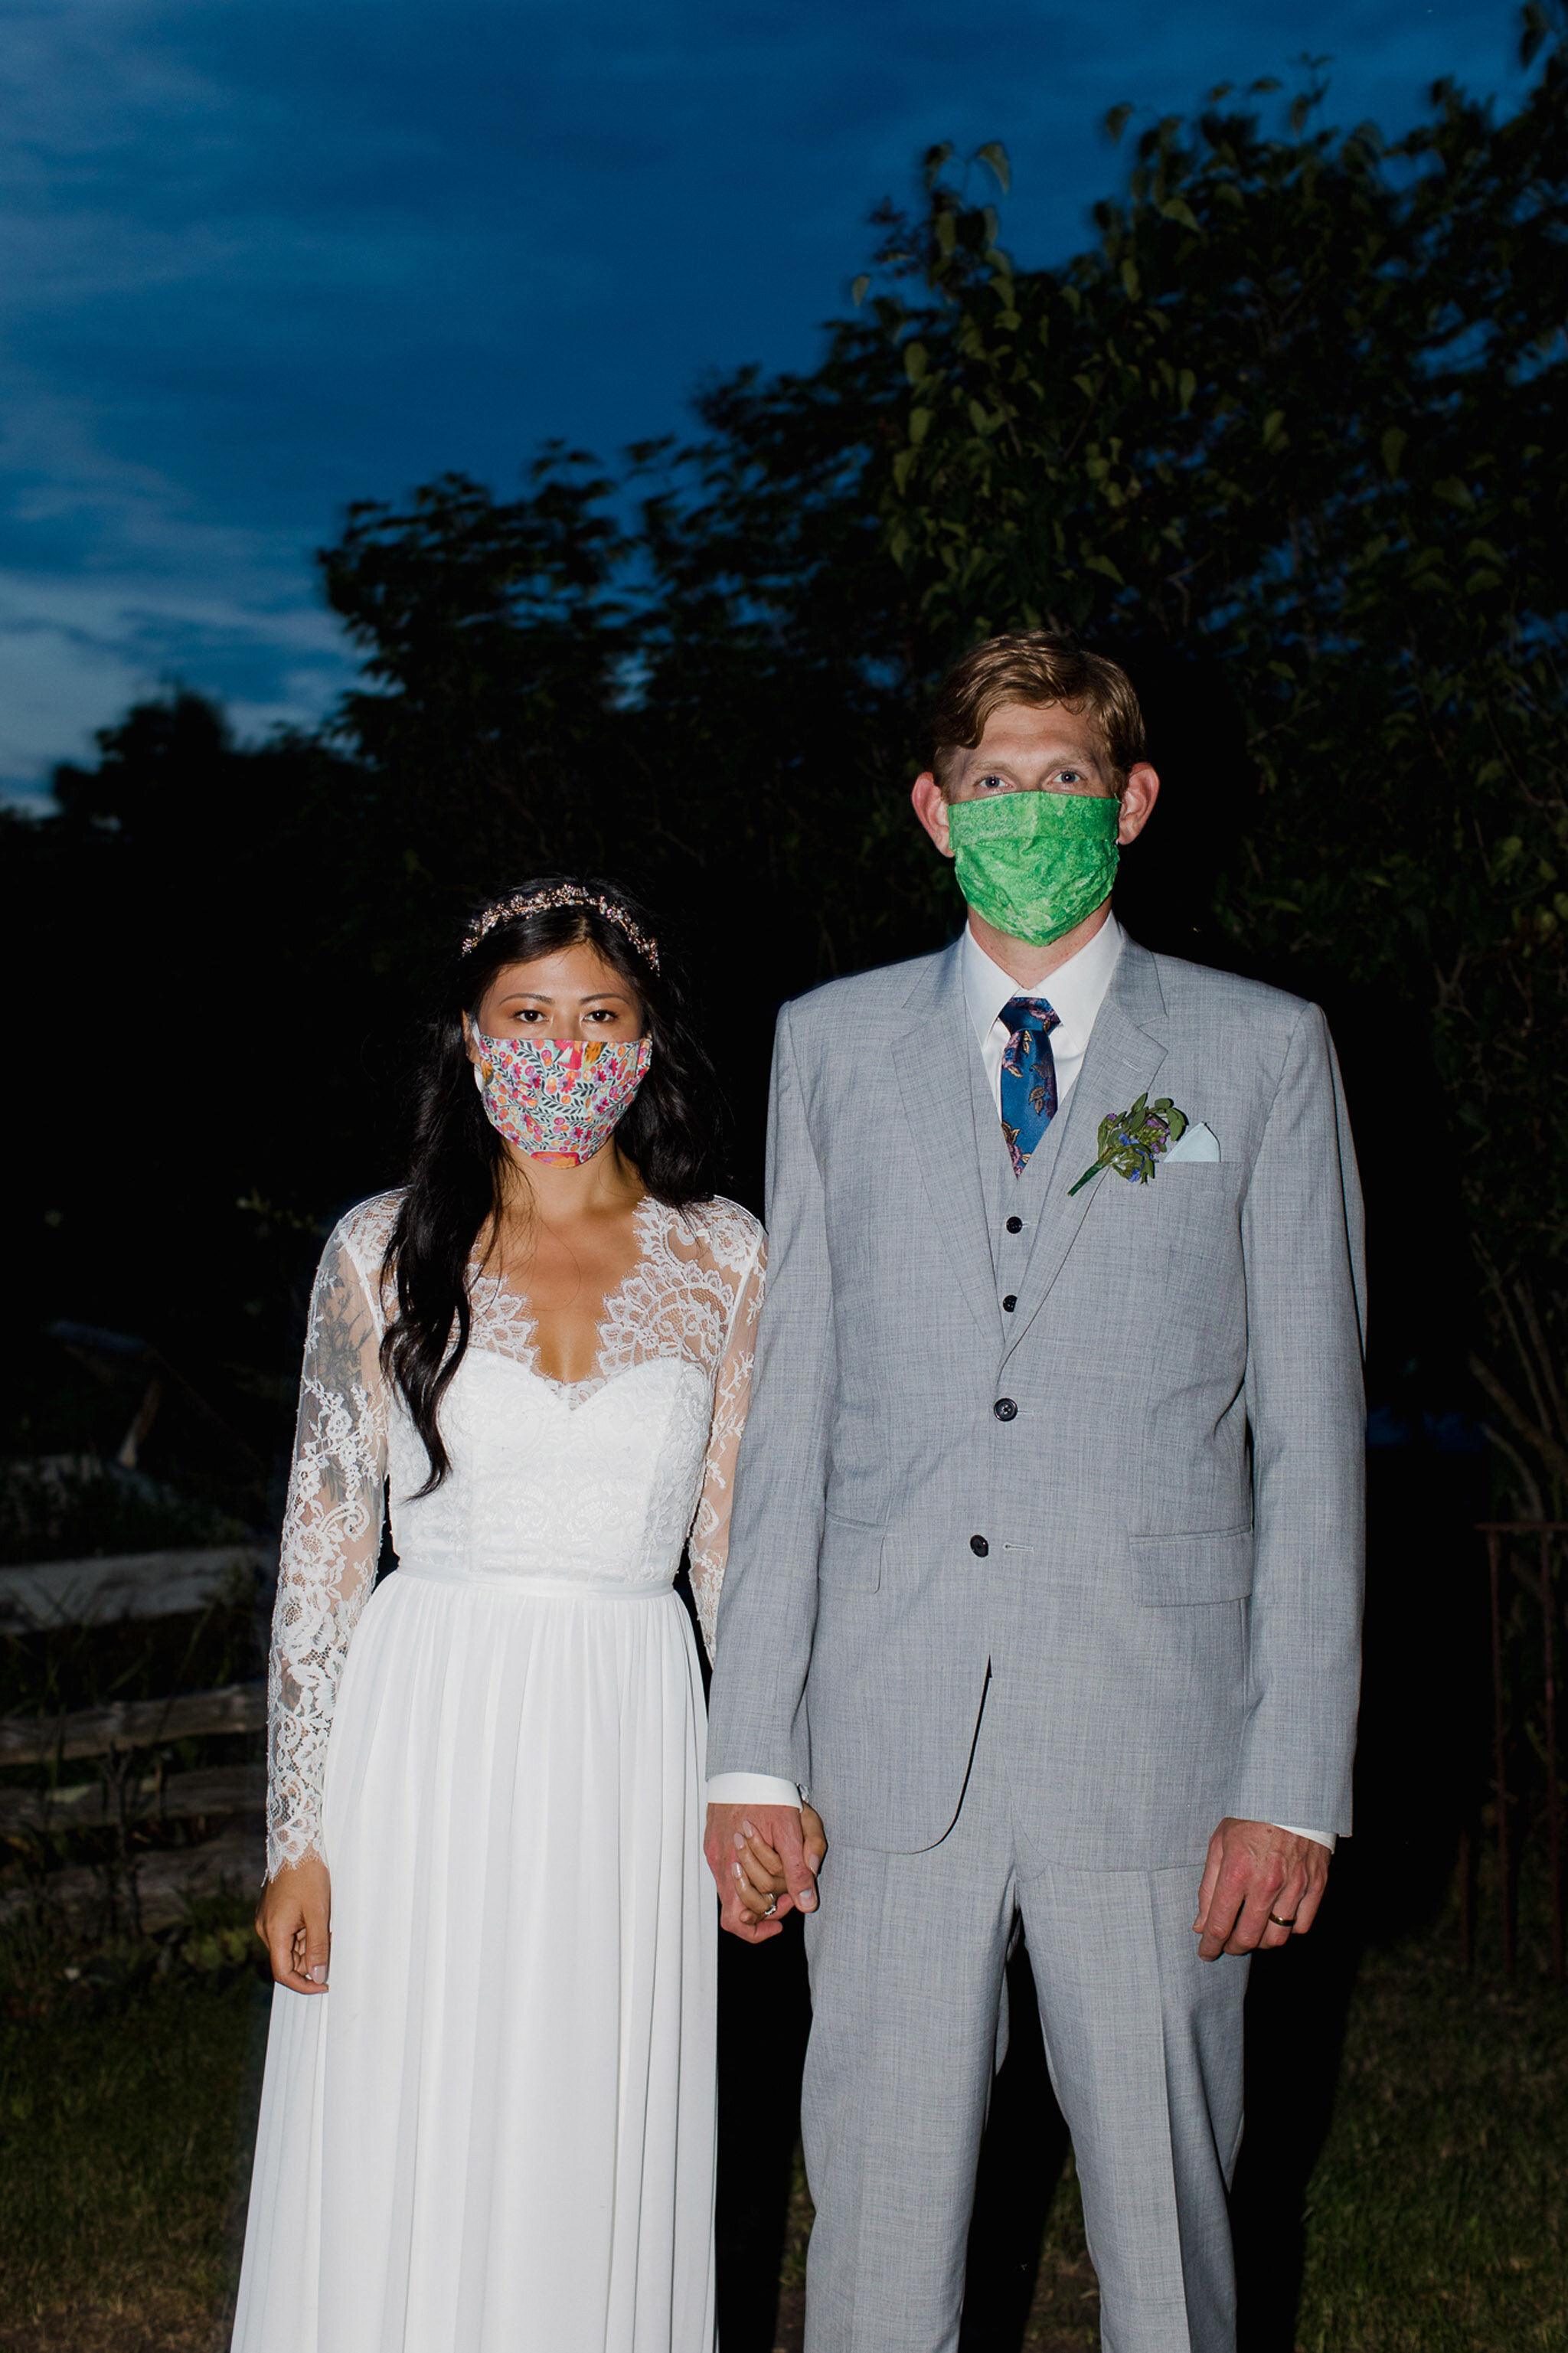 covid wedding couple portrait mask edgy